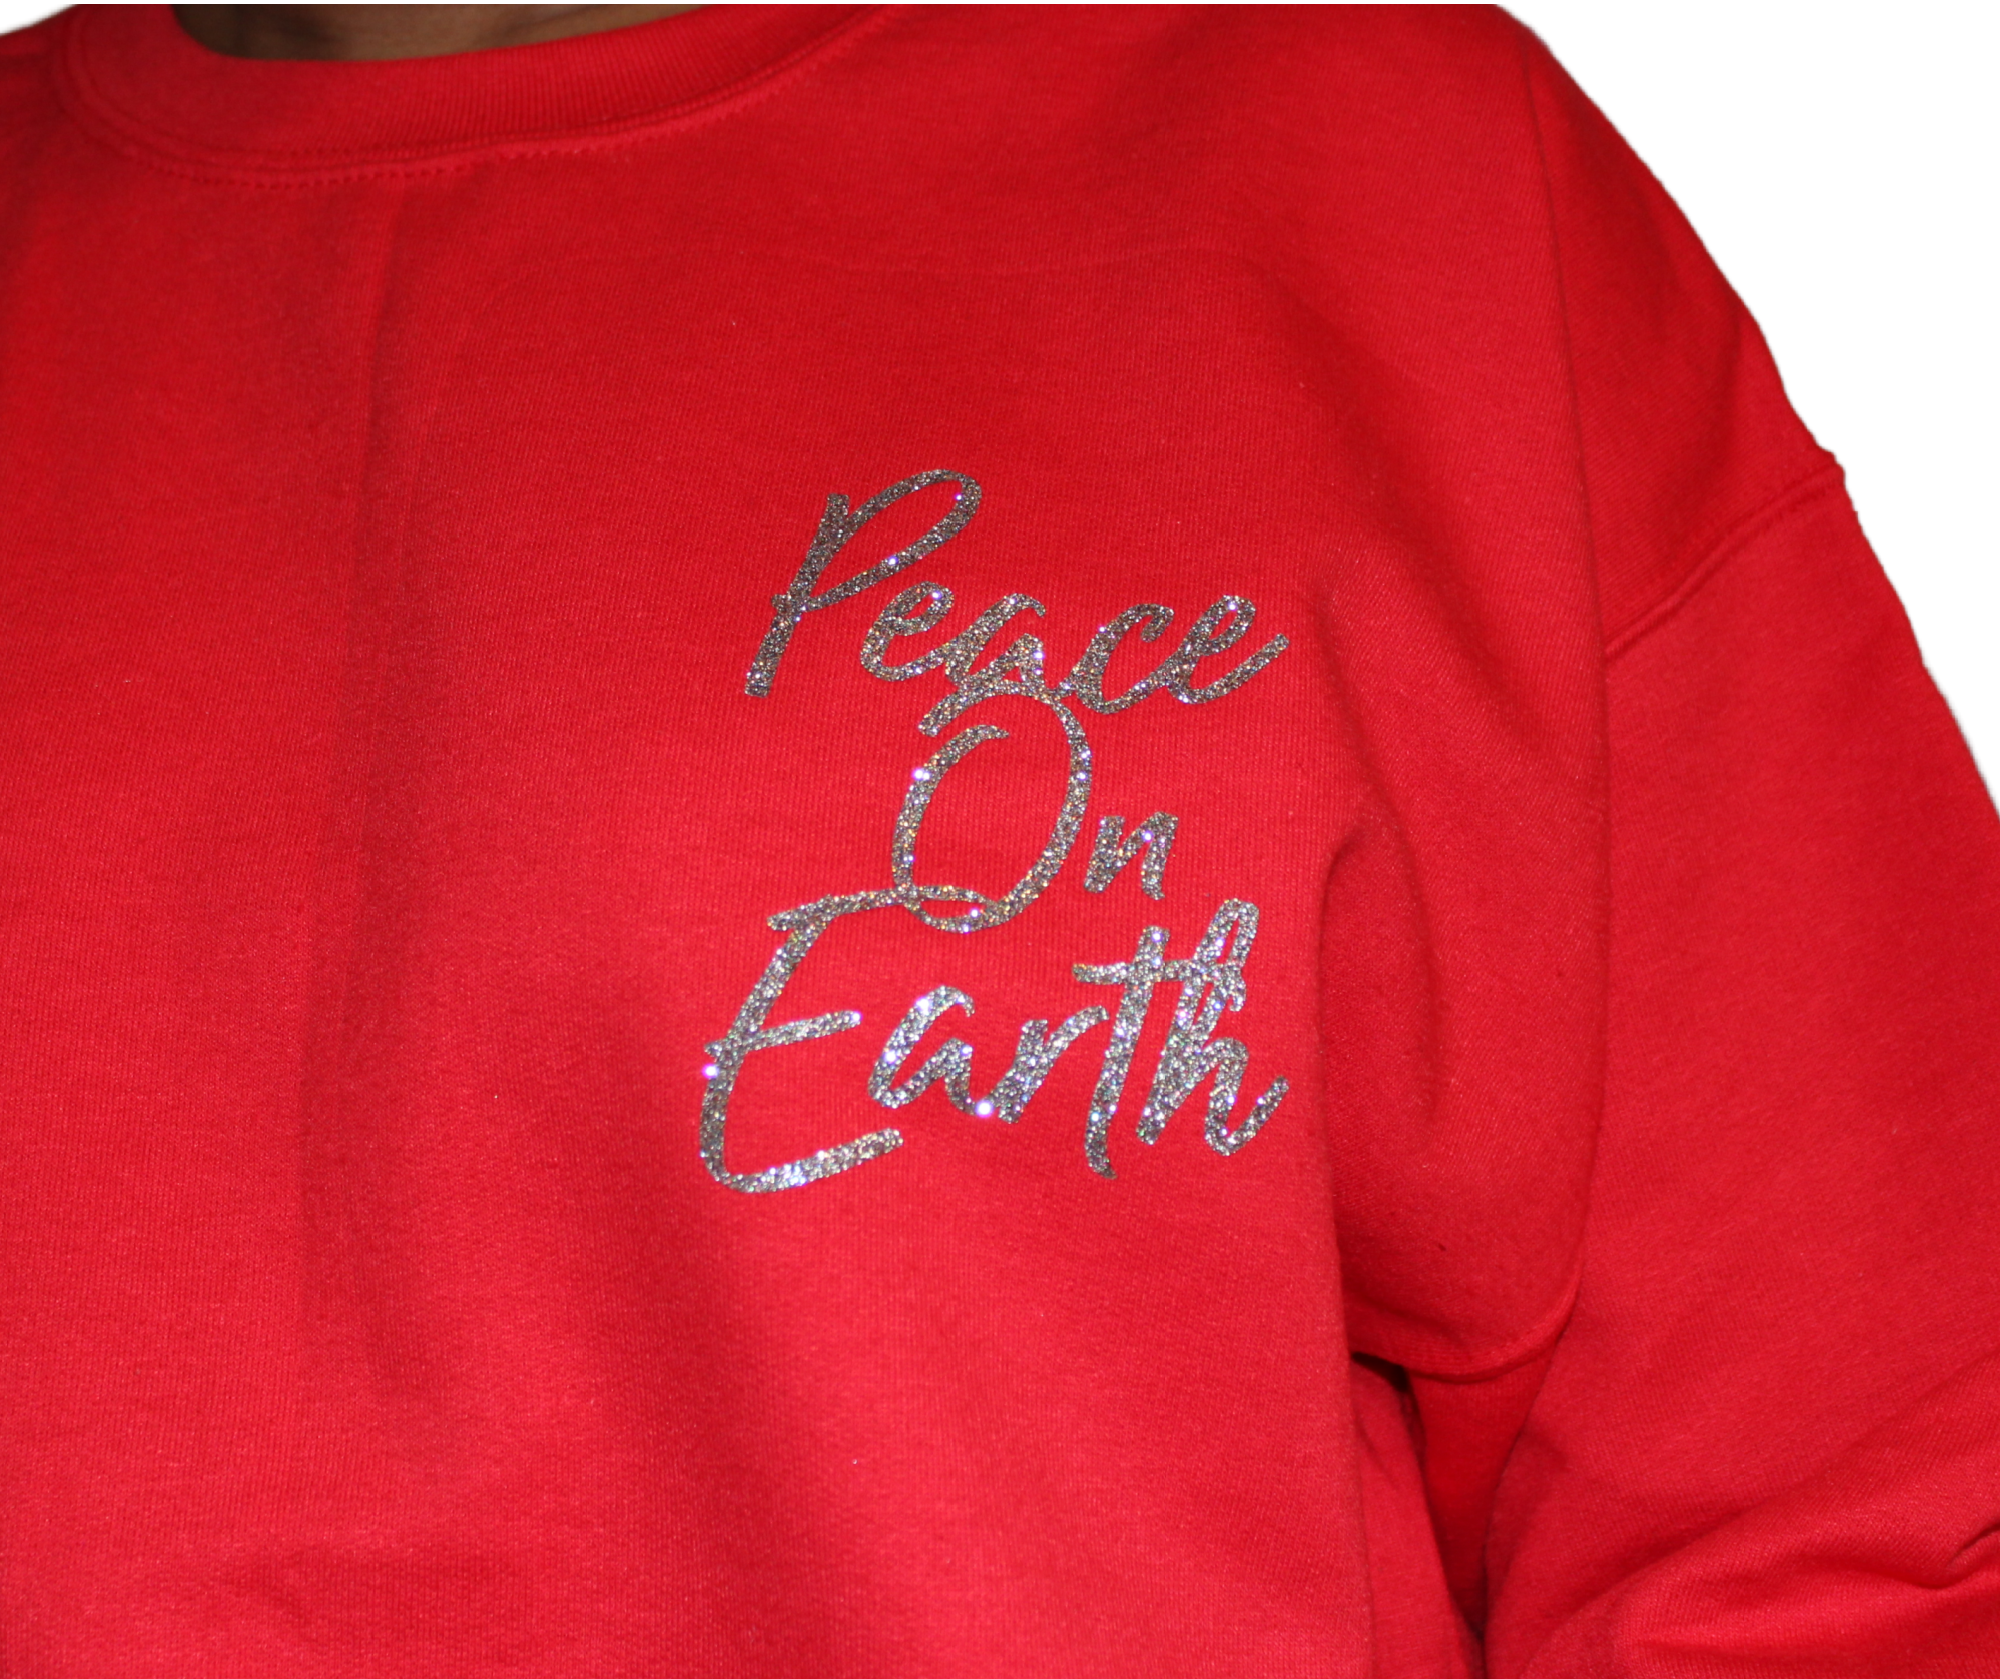 "PEACE ON EARTH" Sweatshirt - Red